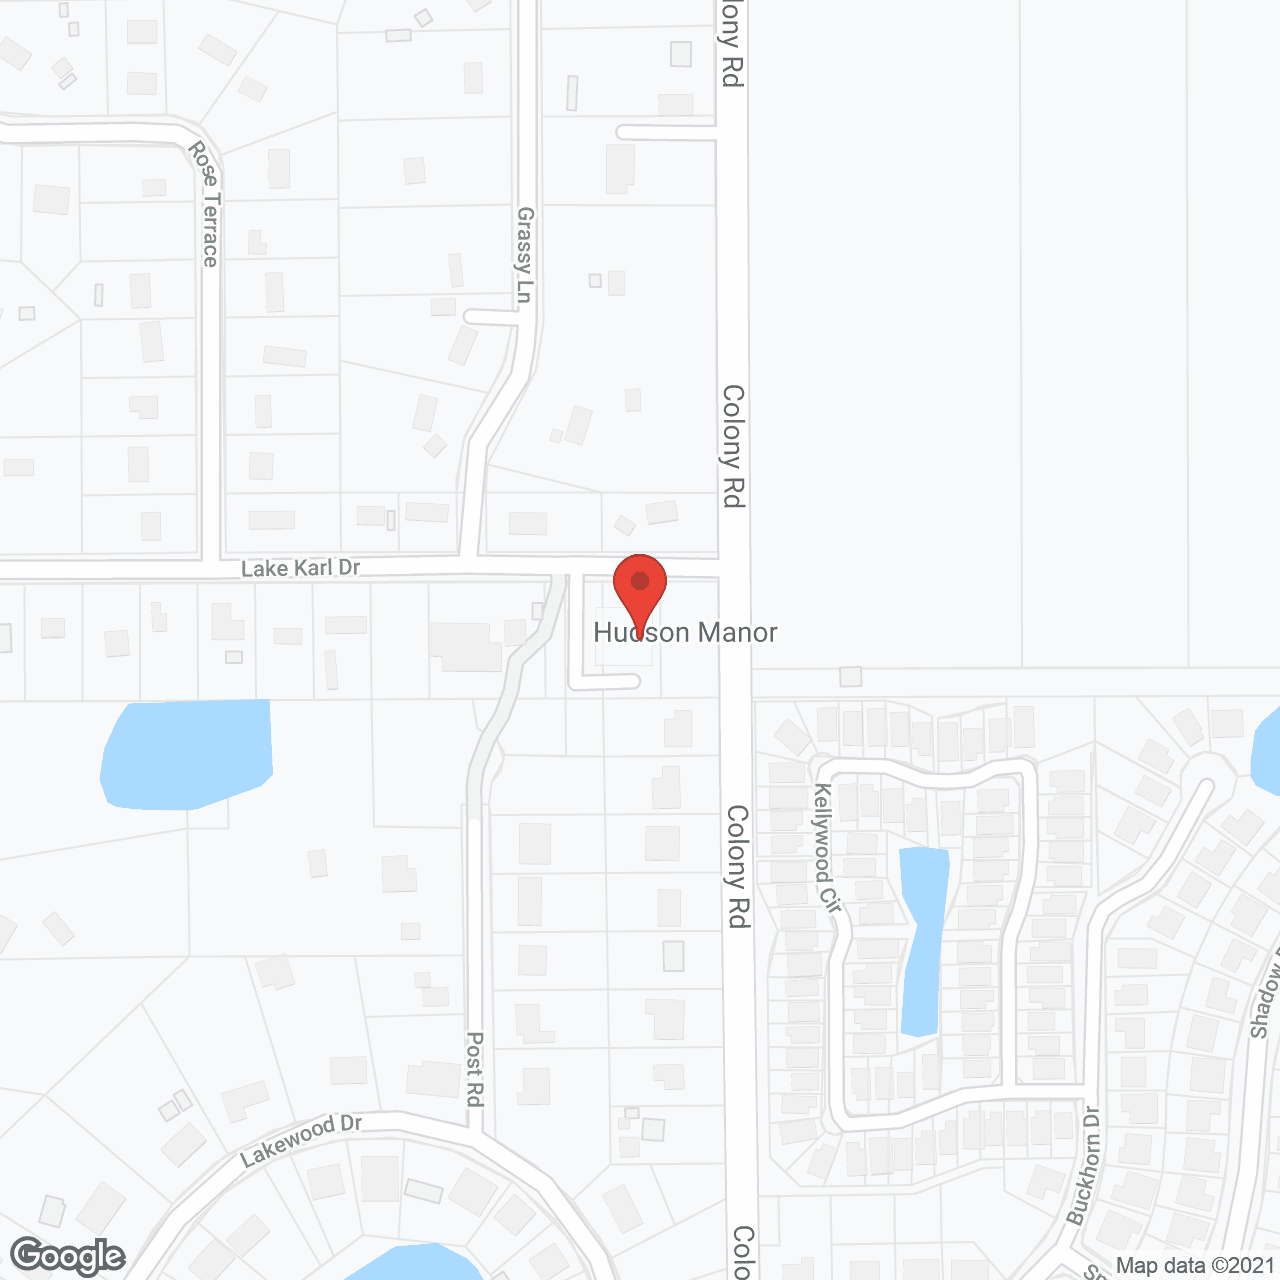 Hudson Manor in google map